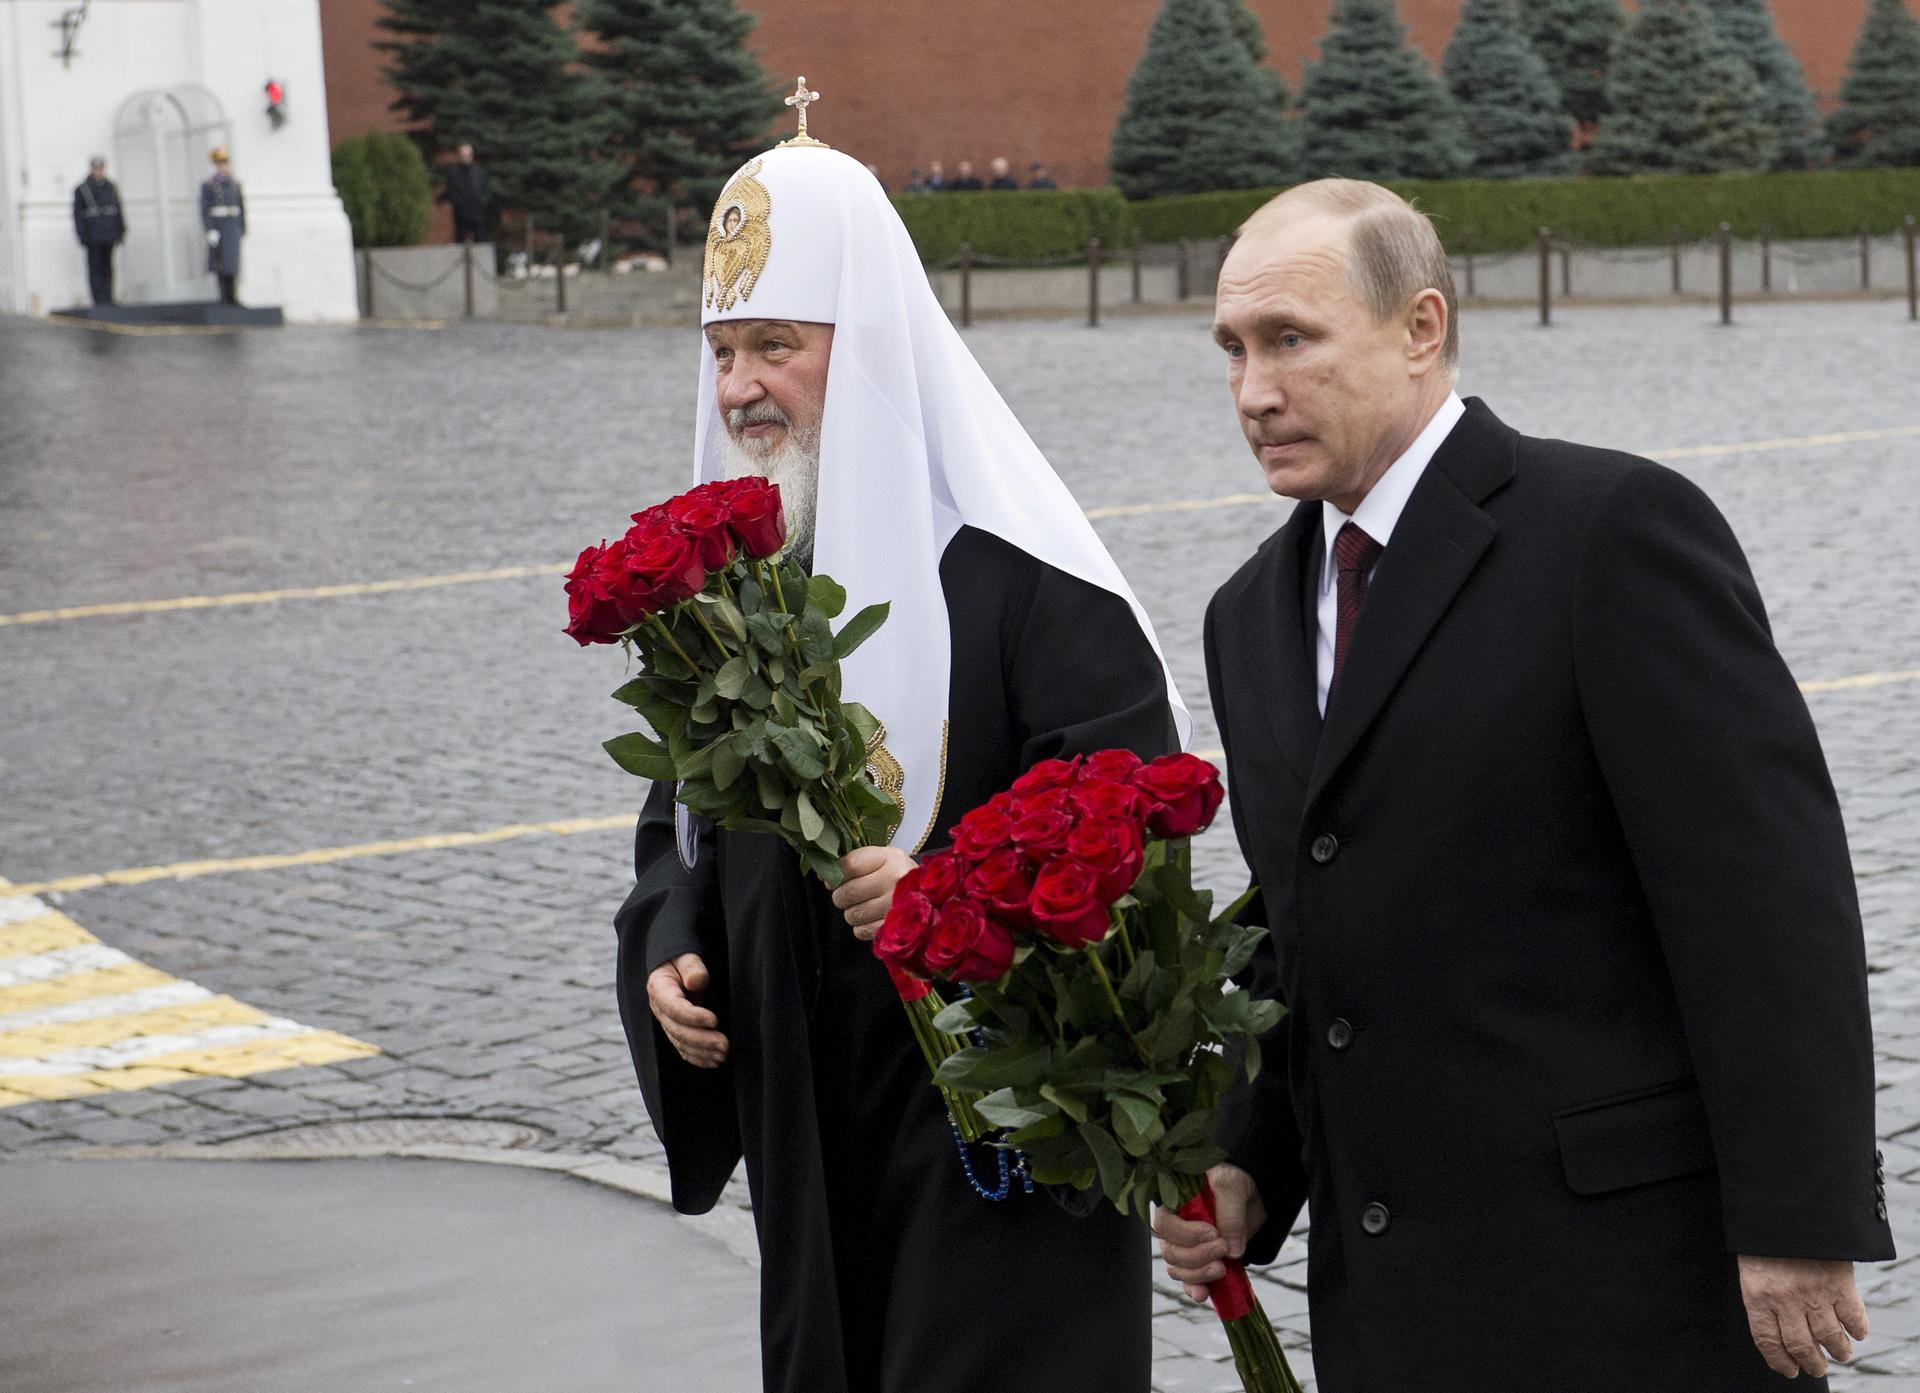 Orthodox priests in Ukraine seek removal of Patriarch Kirill